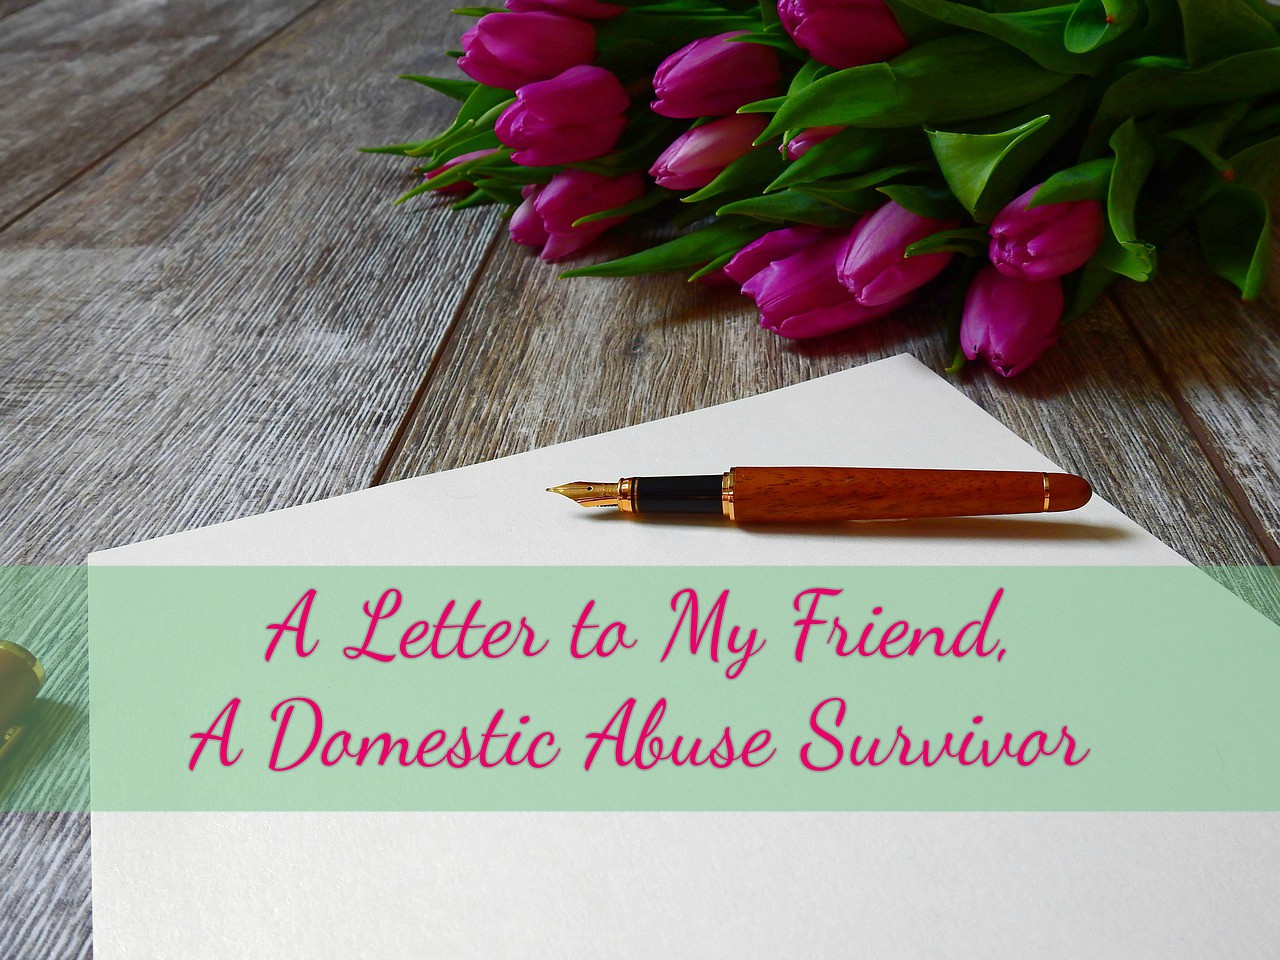 My Friend – A Domestic Abuse Survivor